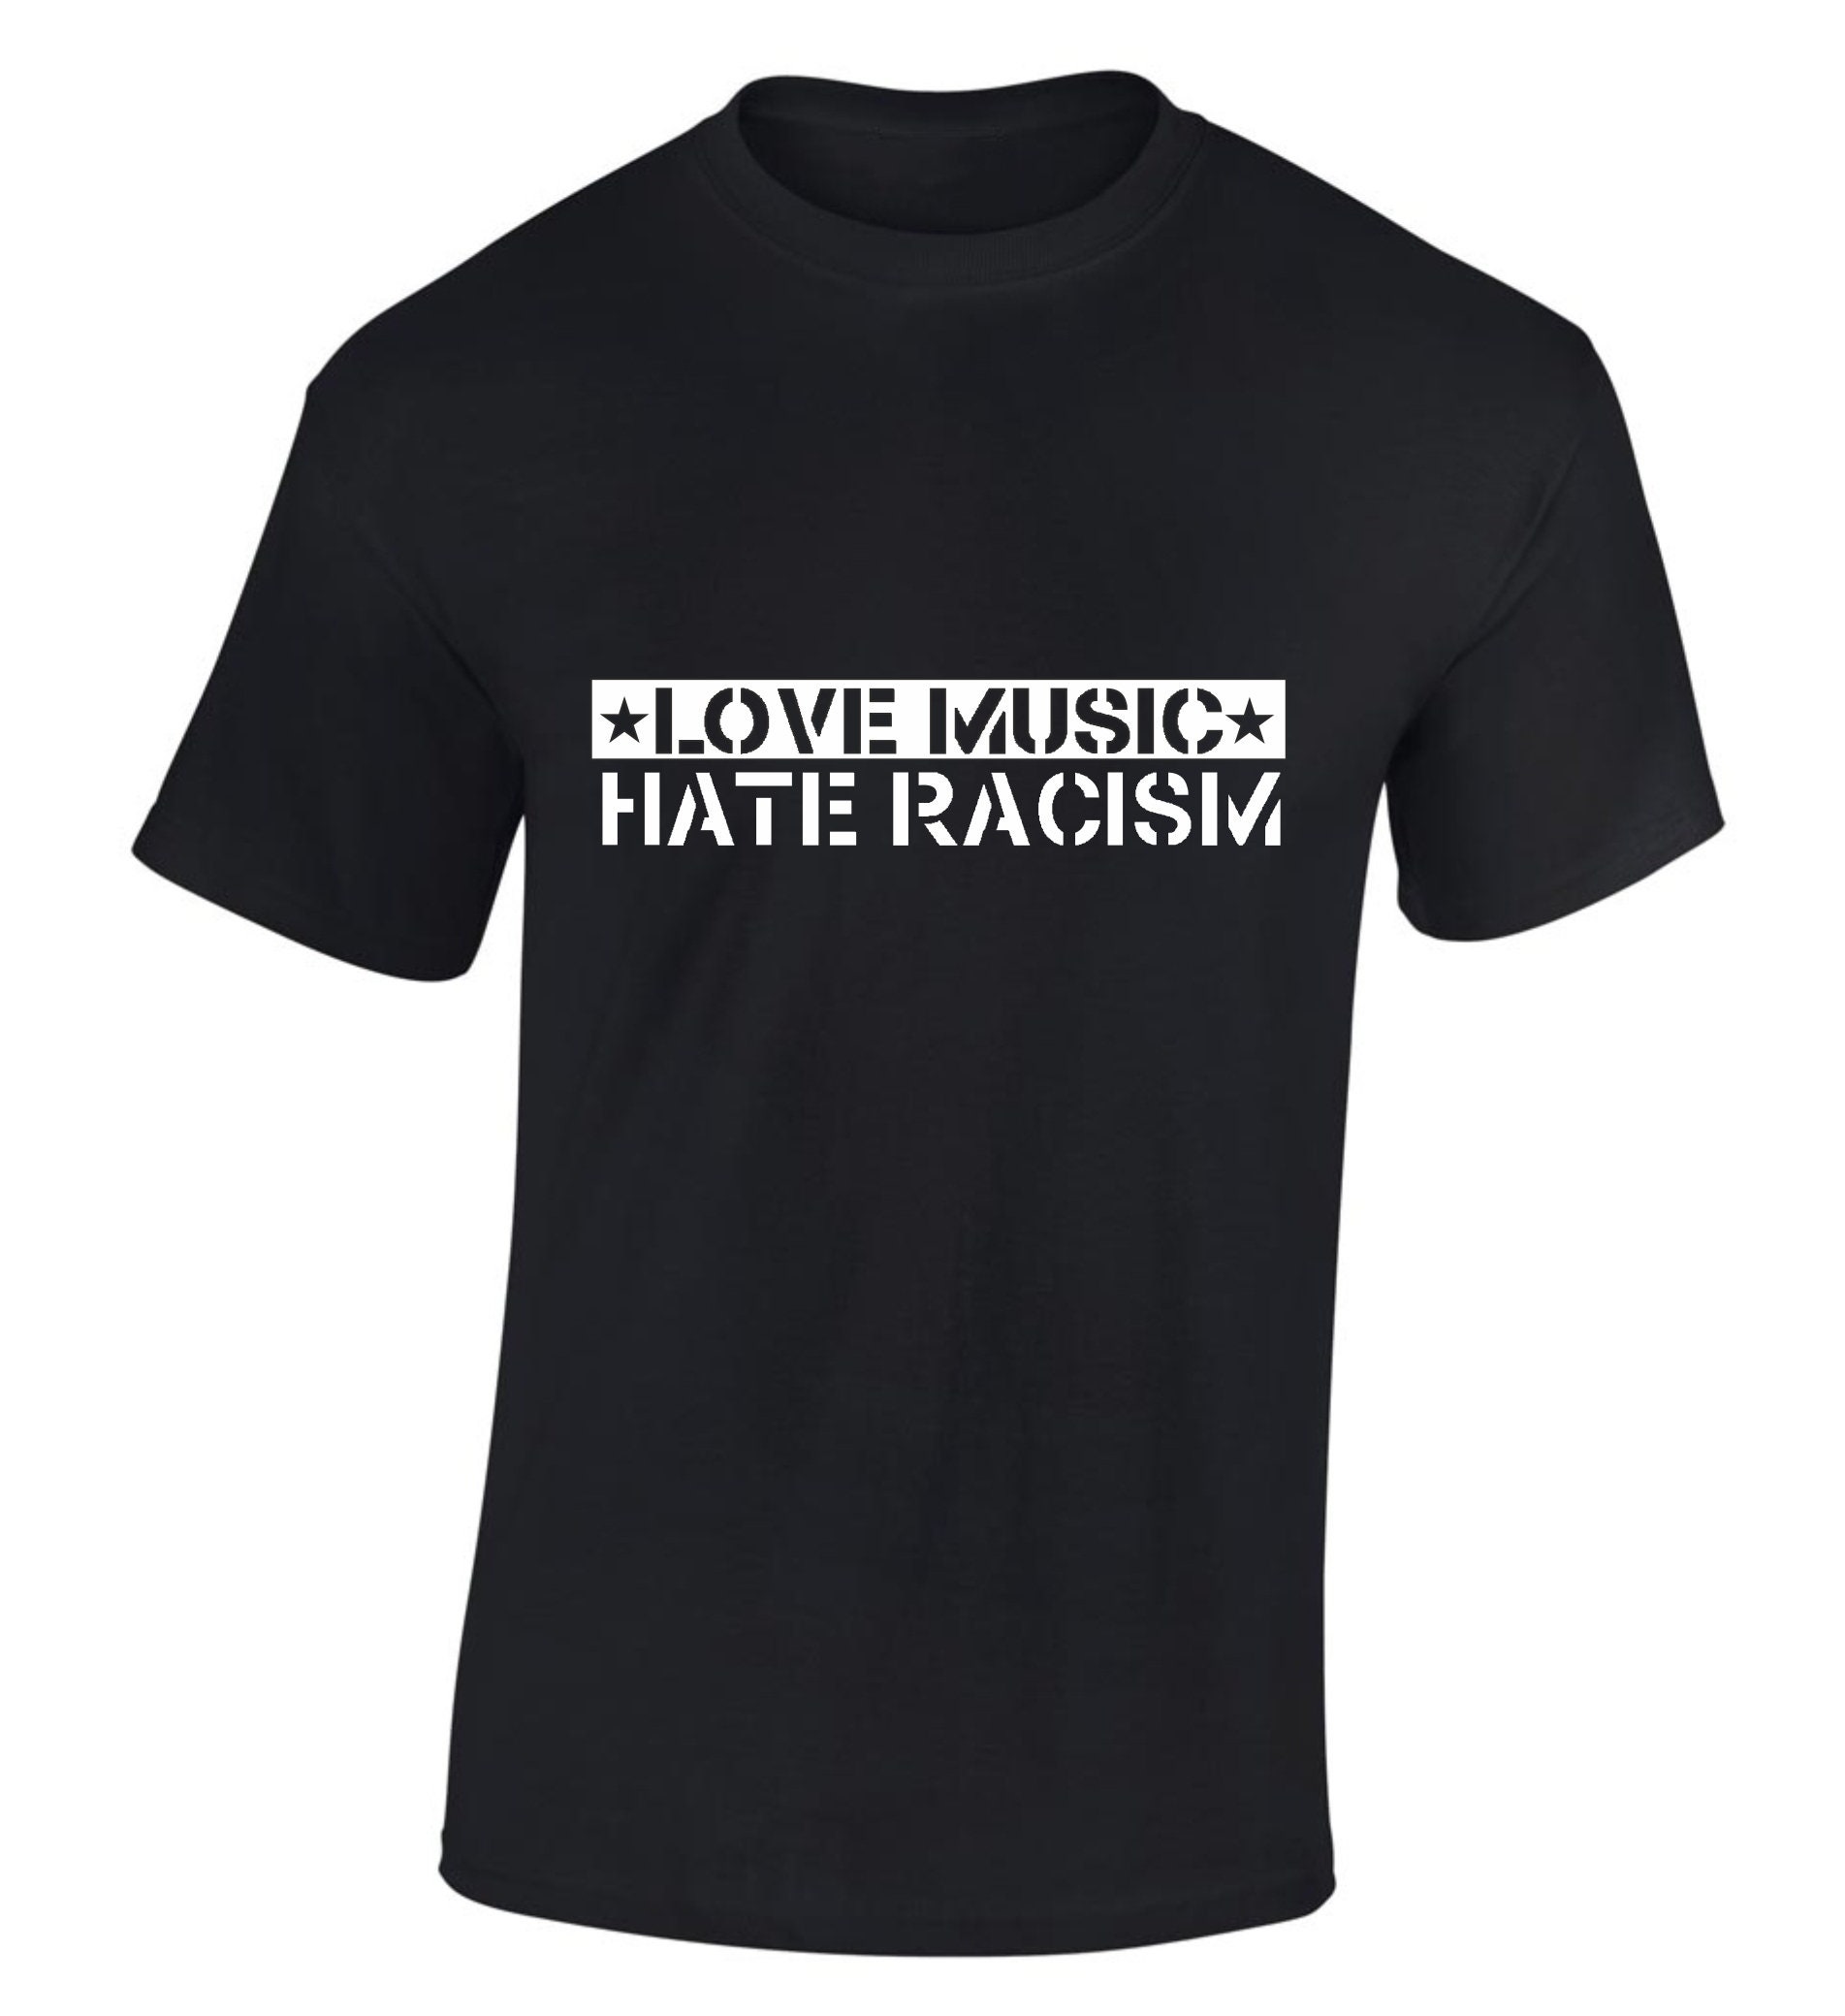 Love Music Hate Racism T-Shirt Antifa antifaschist punk oi ska Etsy.